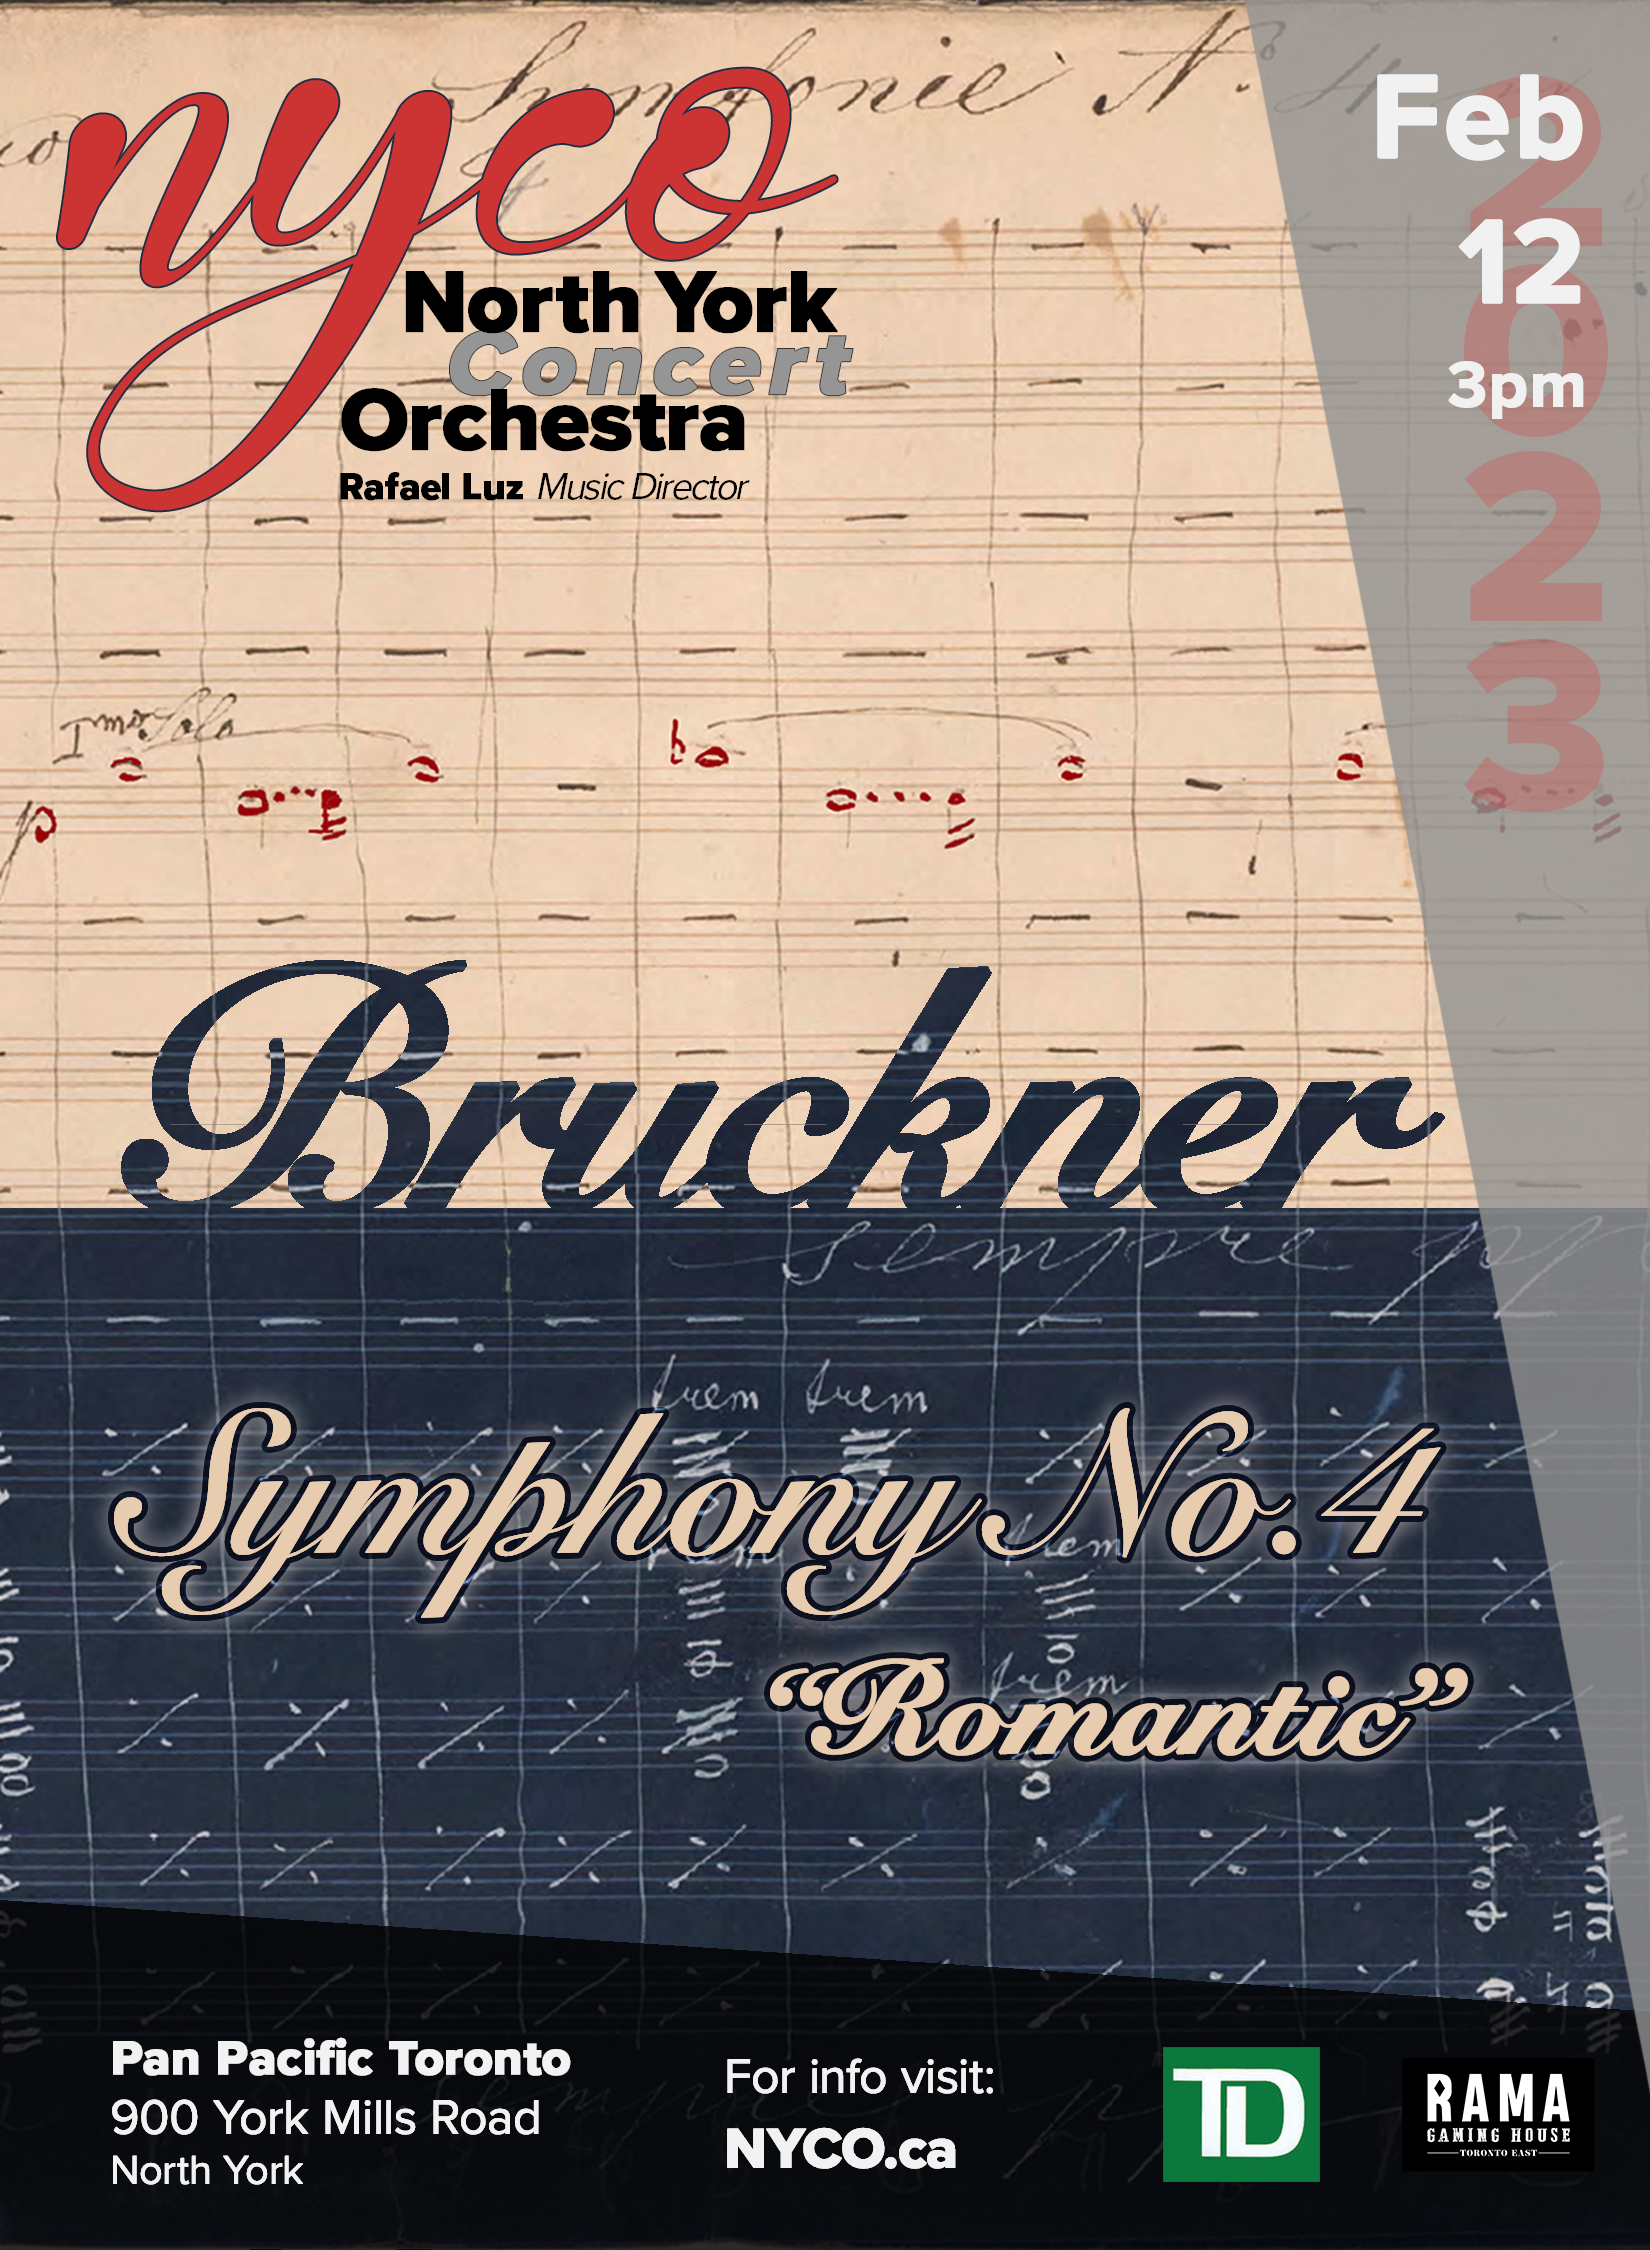 North York Concert OrchestraBruckner's 4th